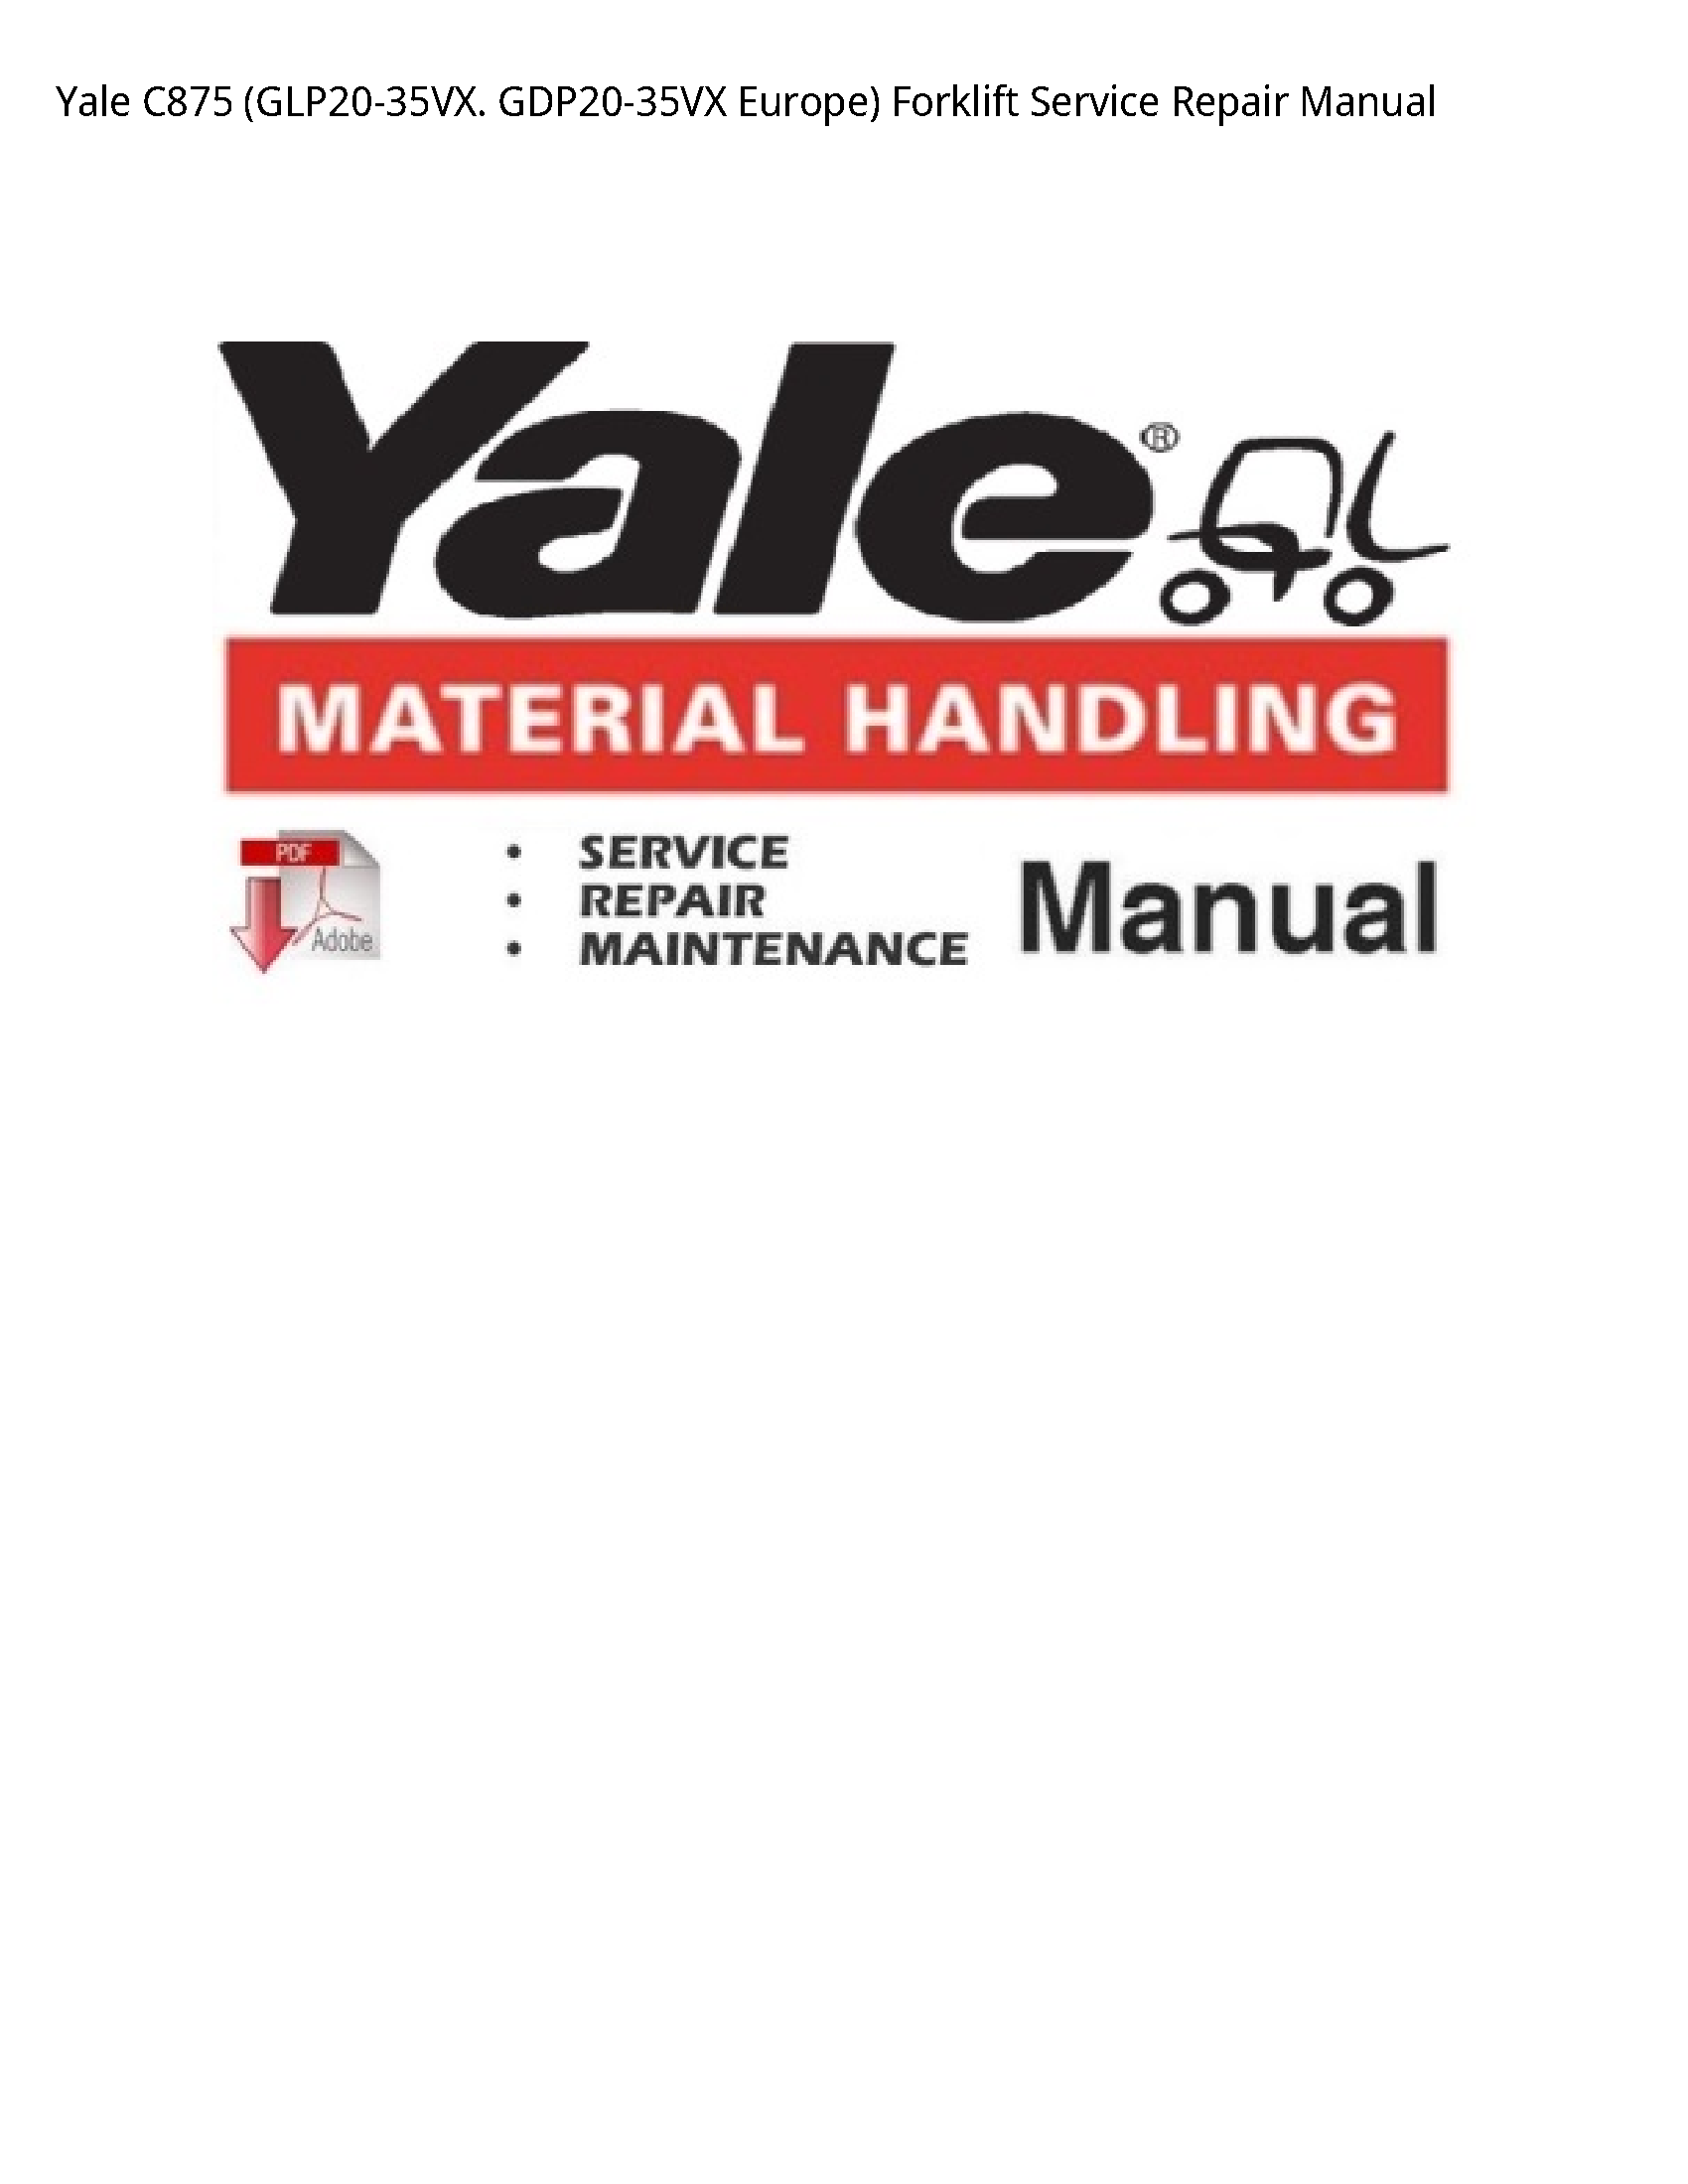 Yale C875 Europe) Forklift manual